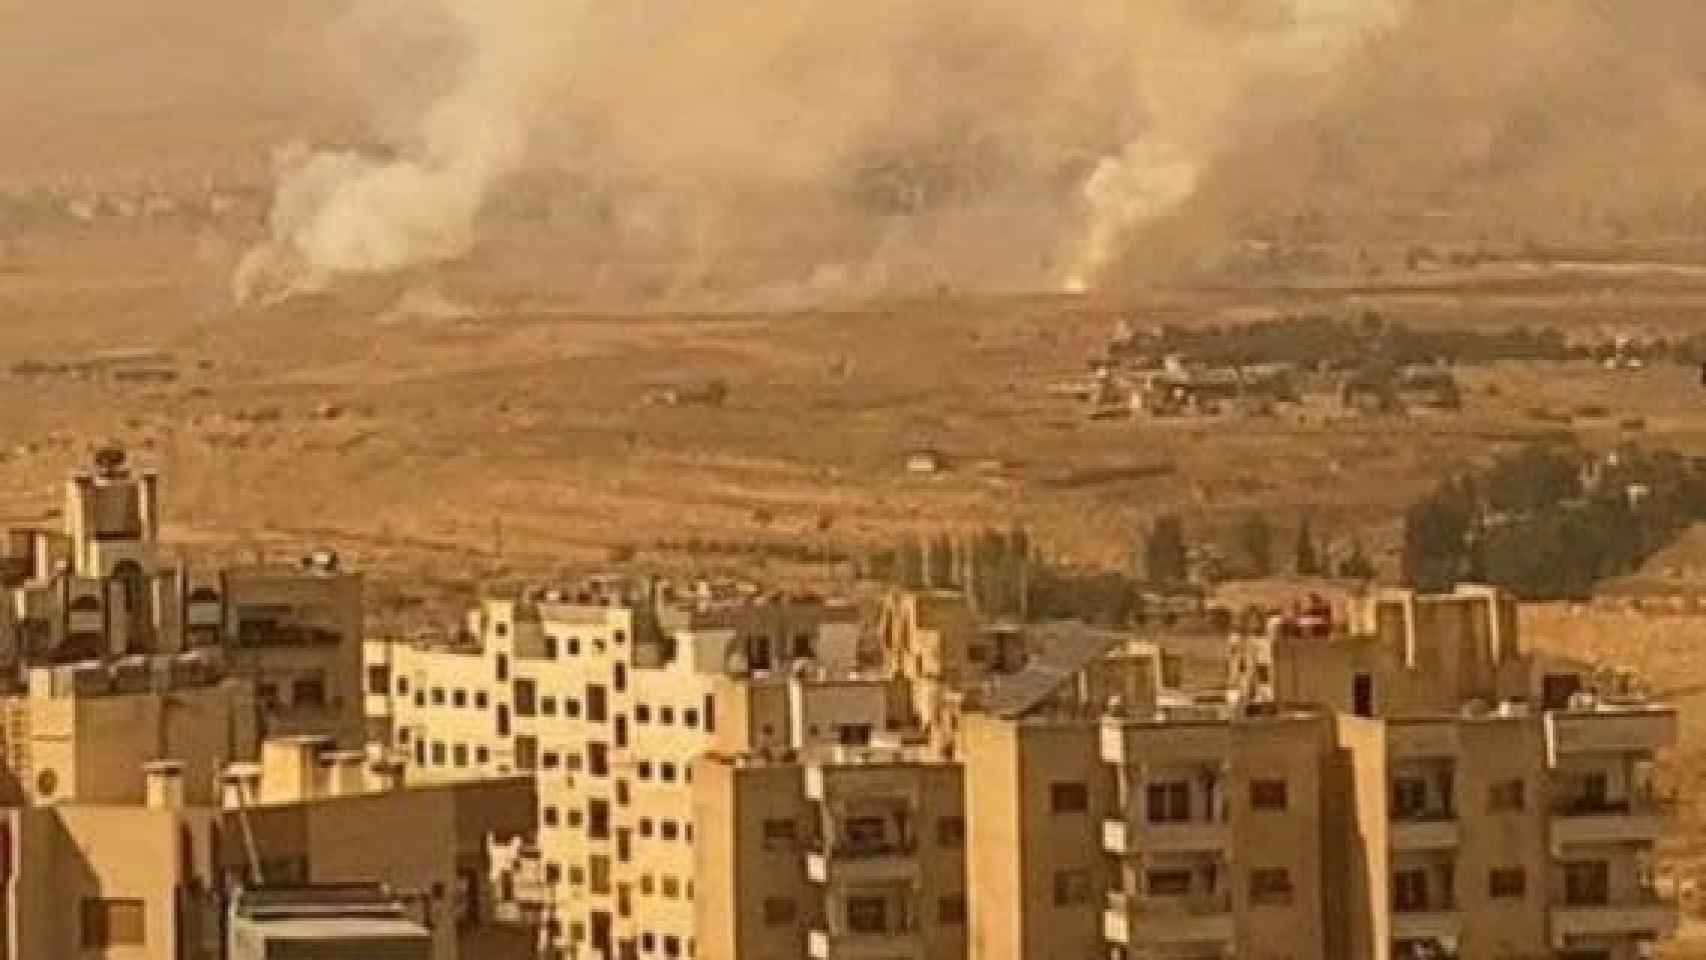 Los misiles impactaron cerca de la capital siria, Damasco.